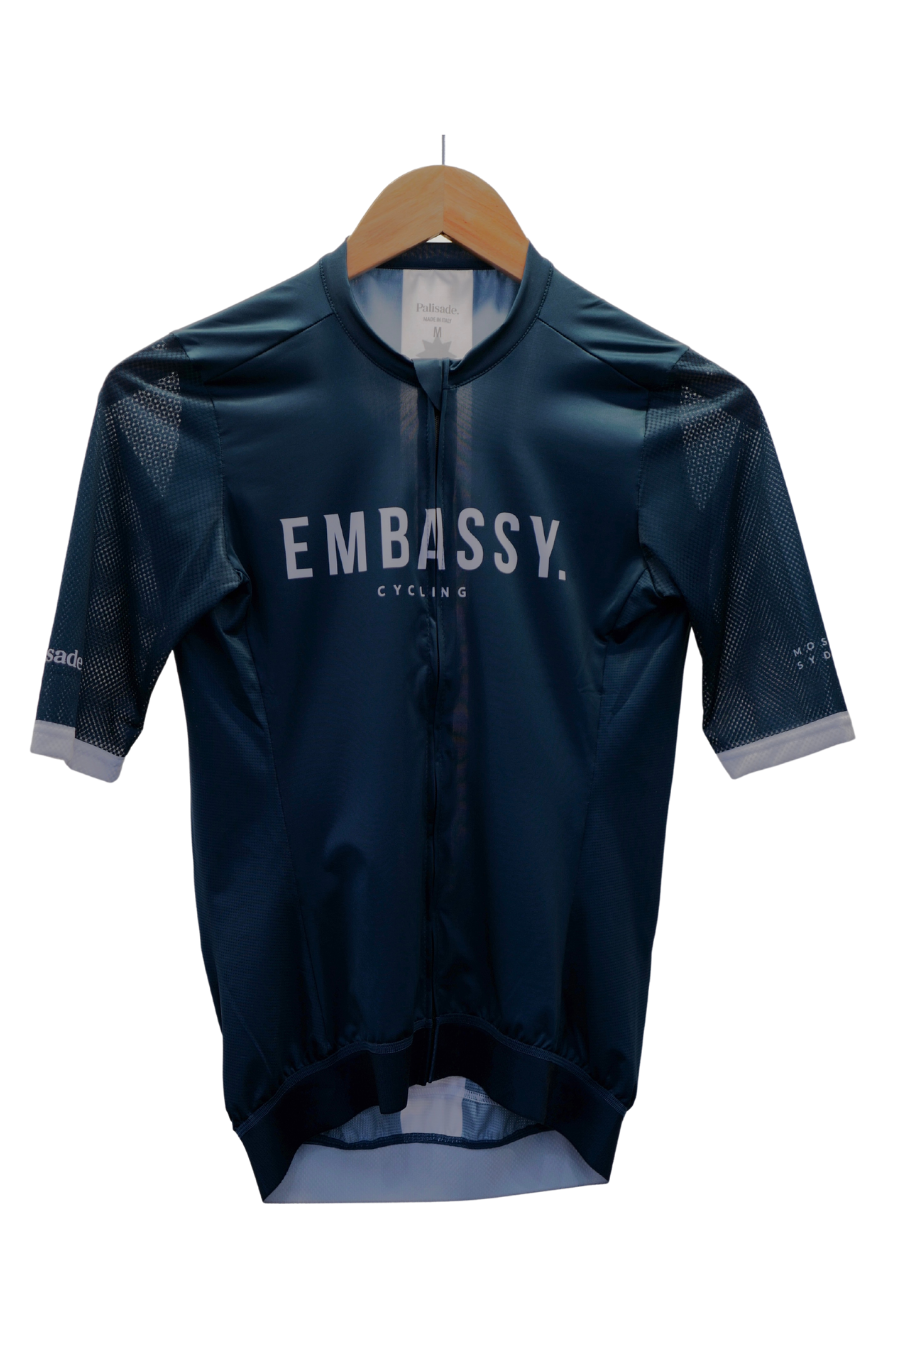 Palisade x Embassy Jersey - Embassy Cycling